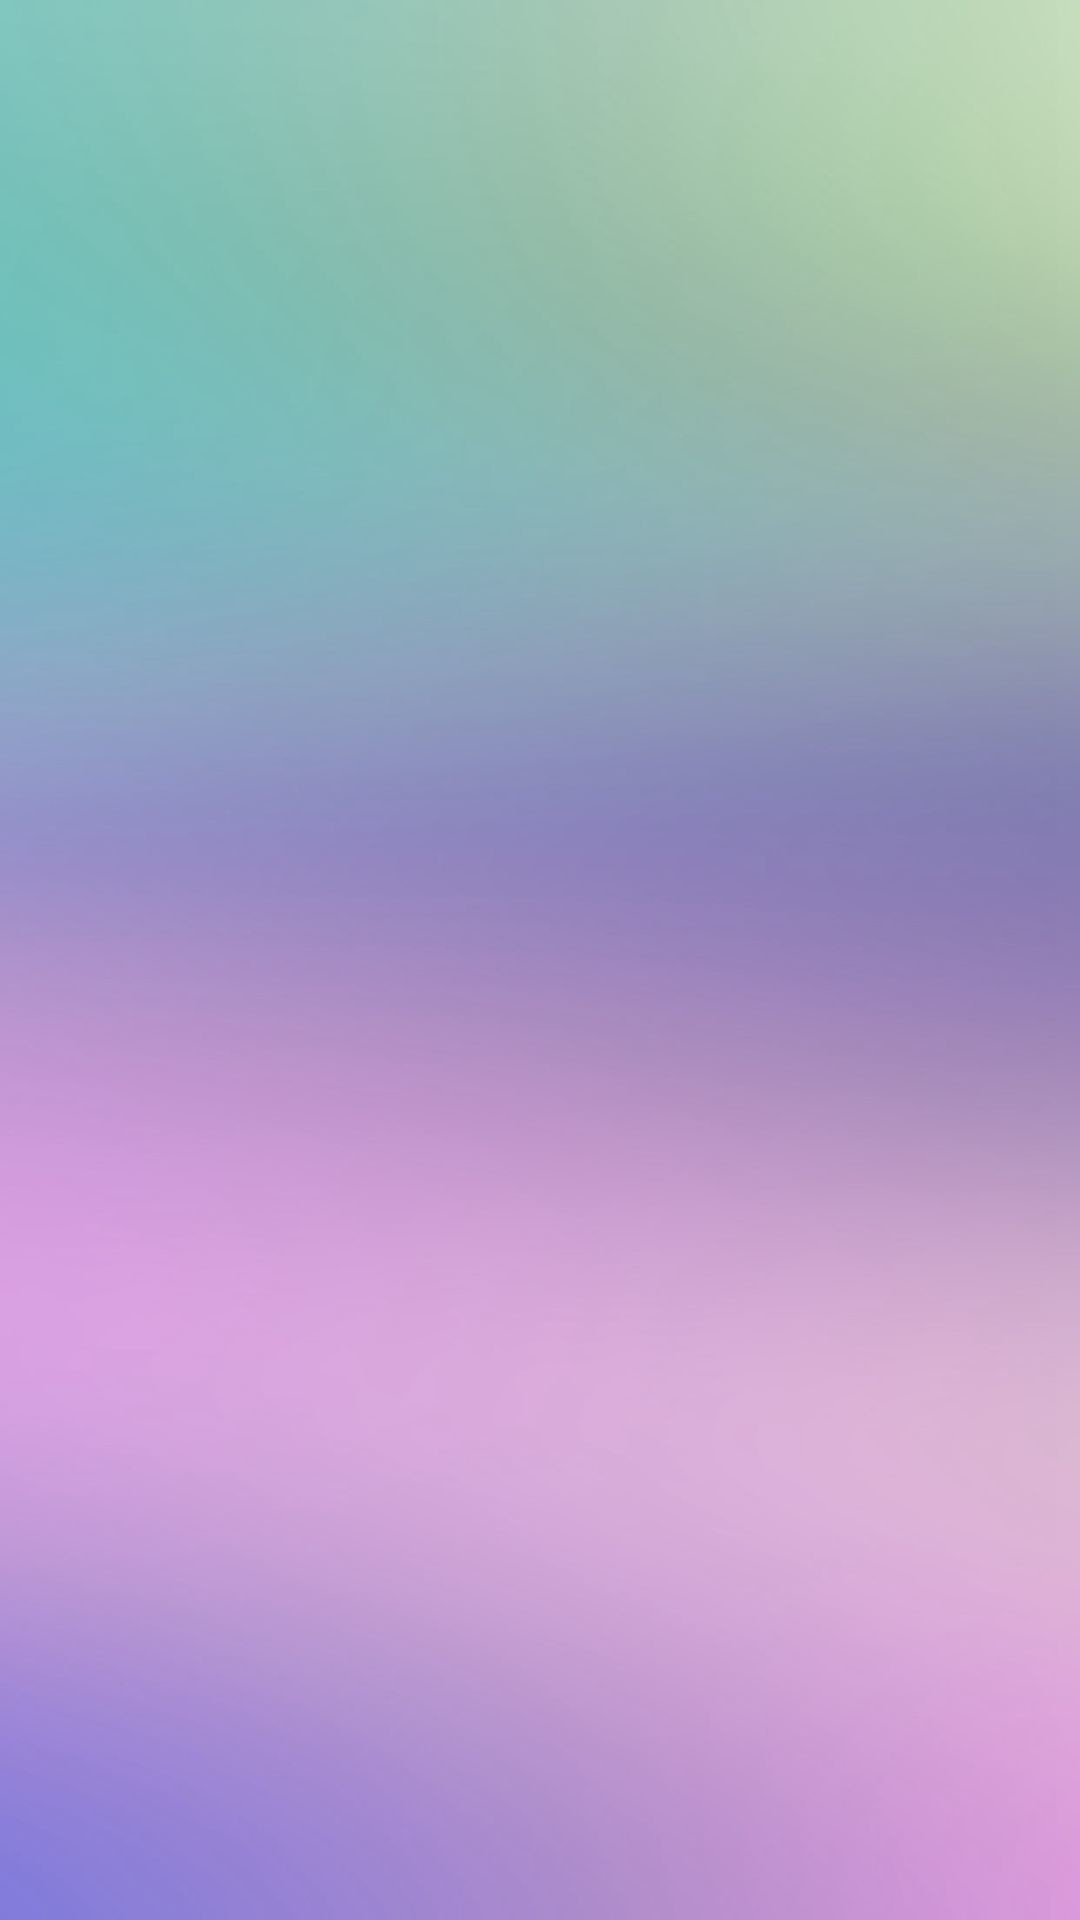 1080x1920, Abstract Blue Blur Gradation - Iphone X Blur Background - HD Wallpaper 